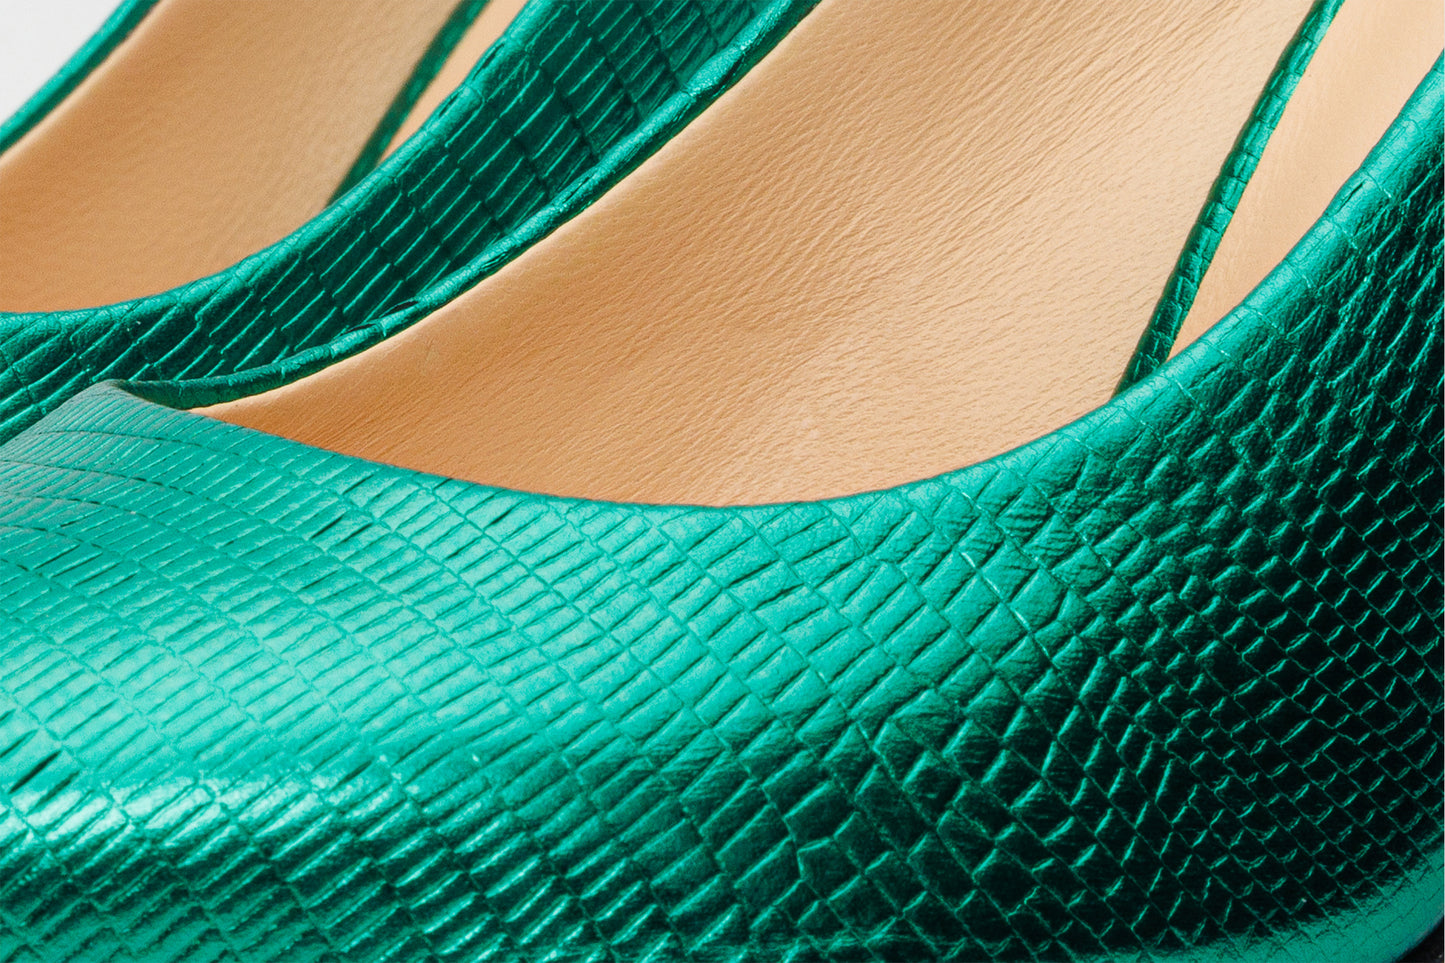 The Maple Green Leather Pump Fuchsia Sole Women Shoe